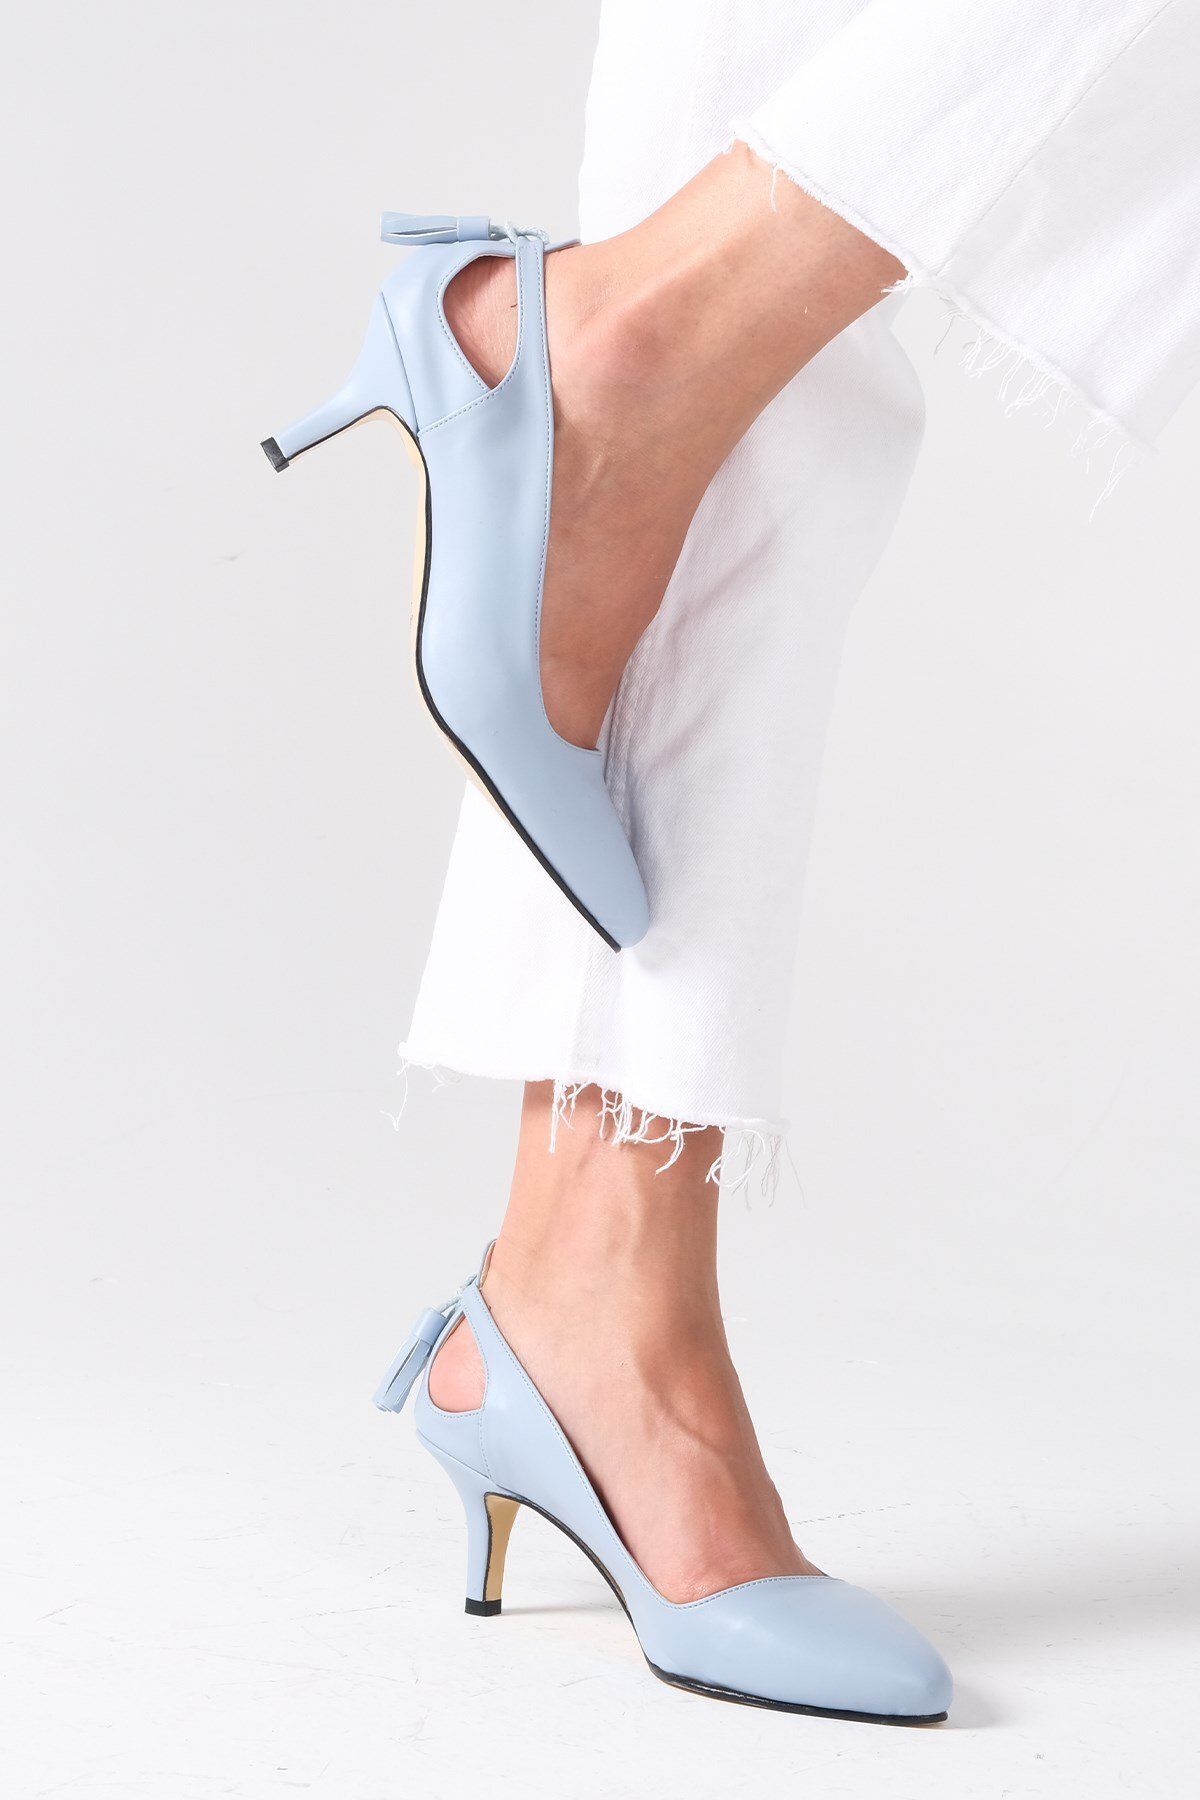 Mio Gusto Drop Mavi Renk Kadın Kısa Topuklu Ayakkabı